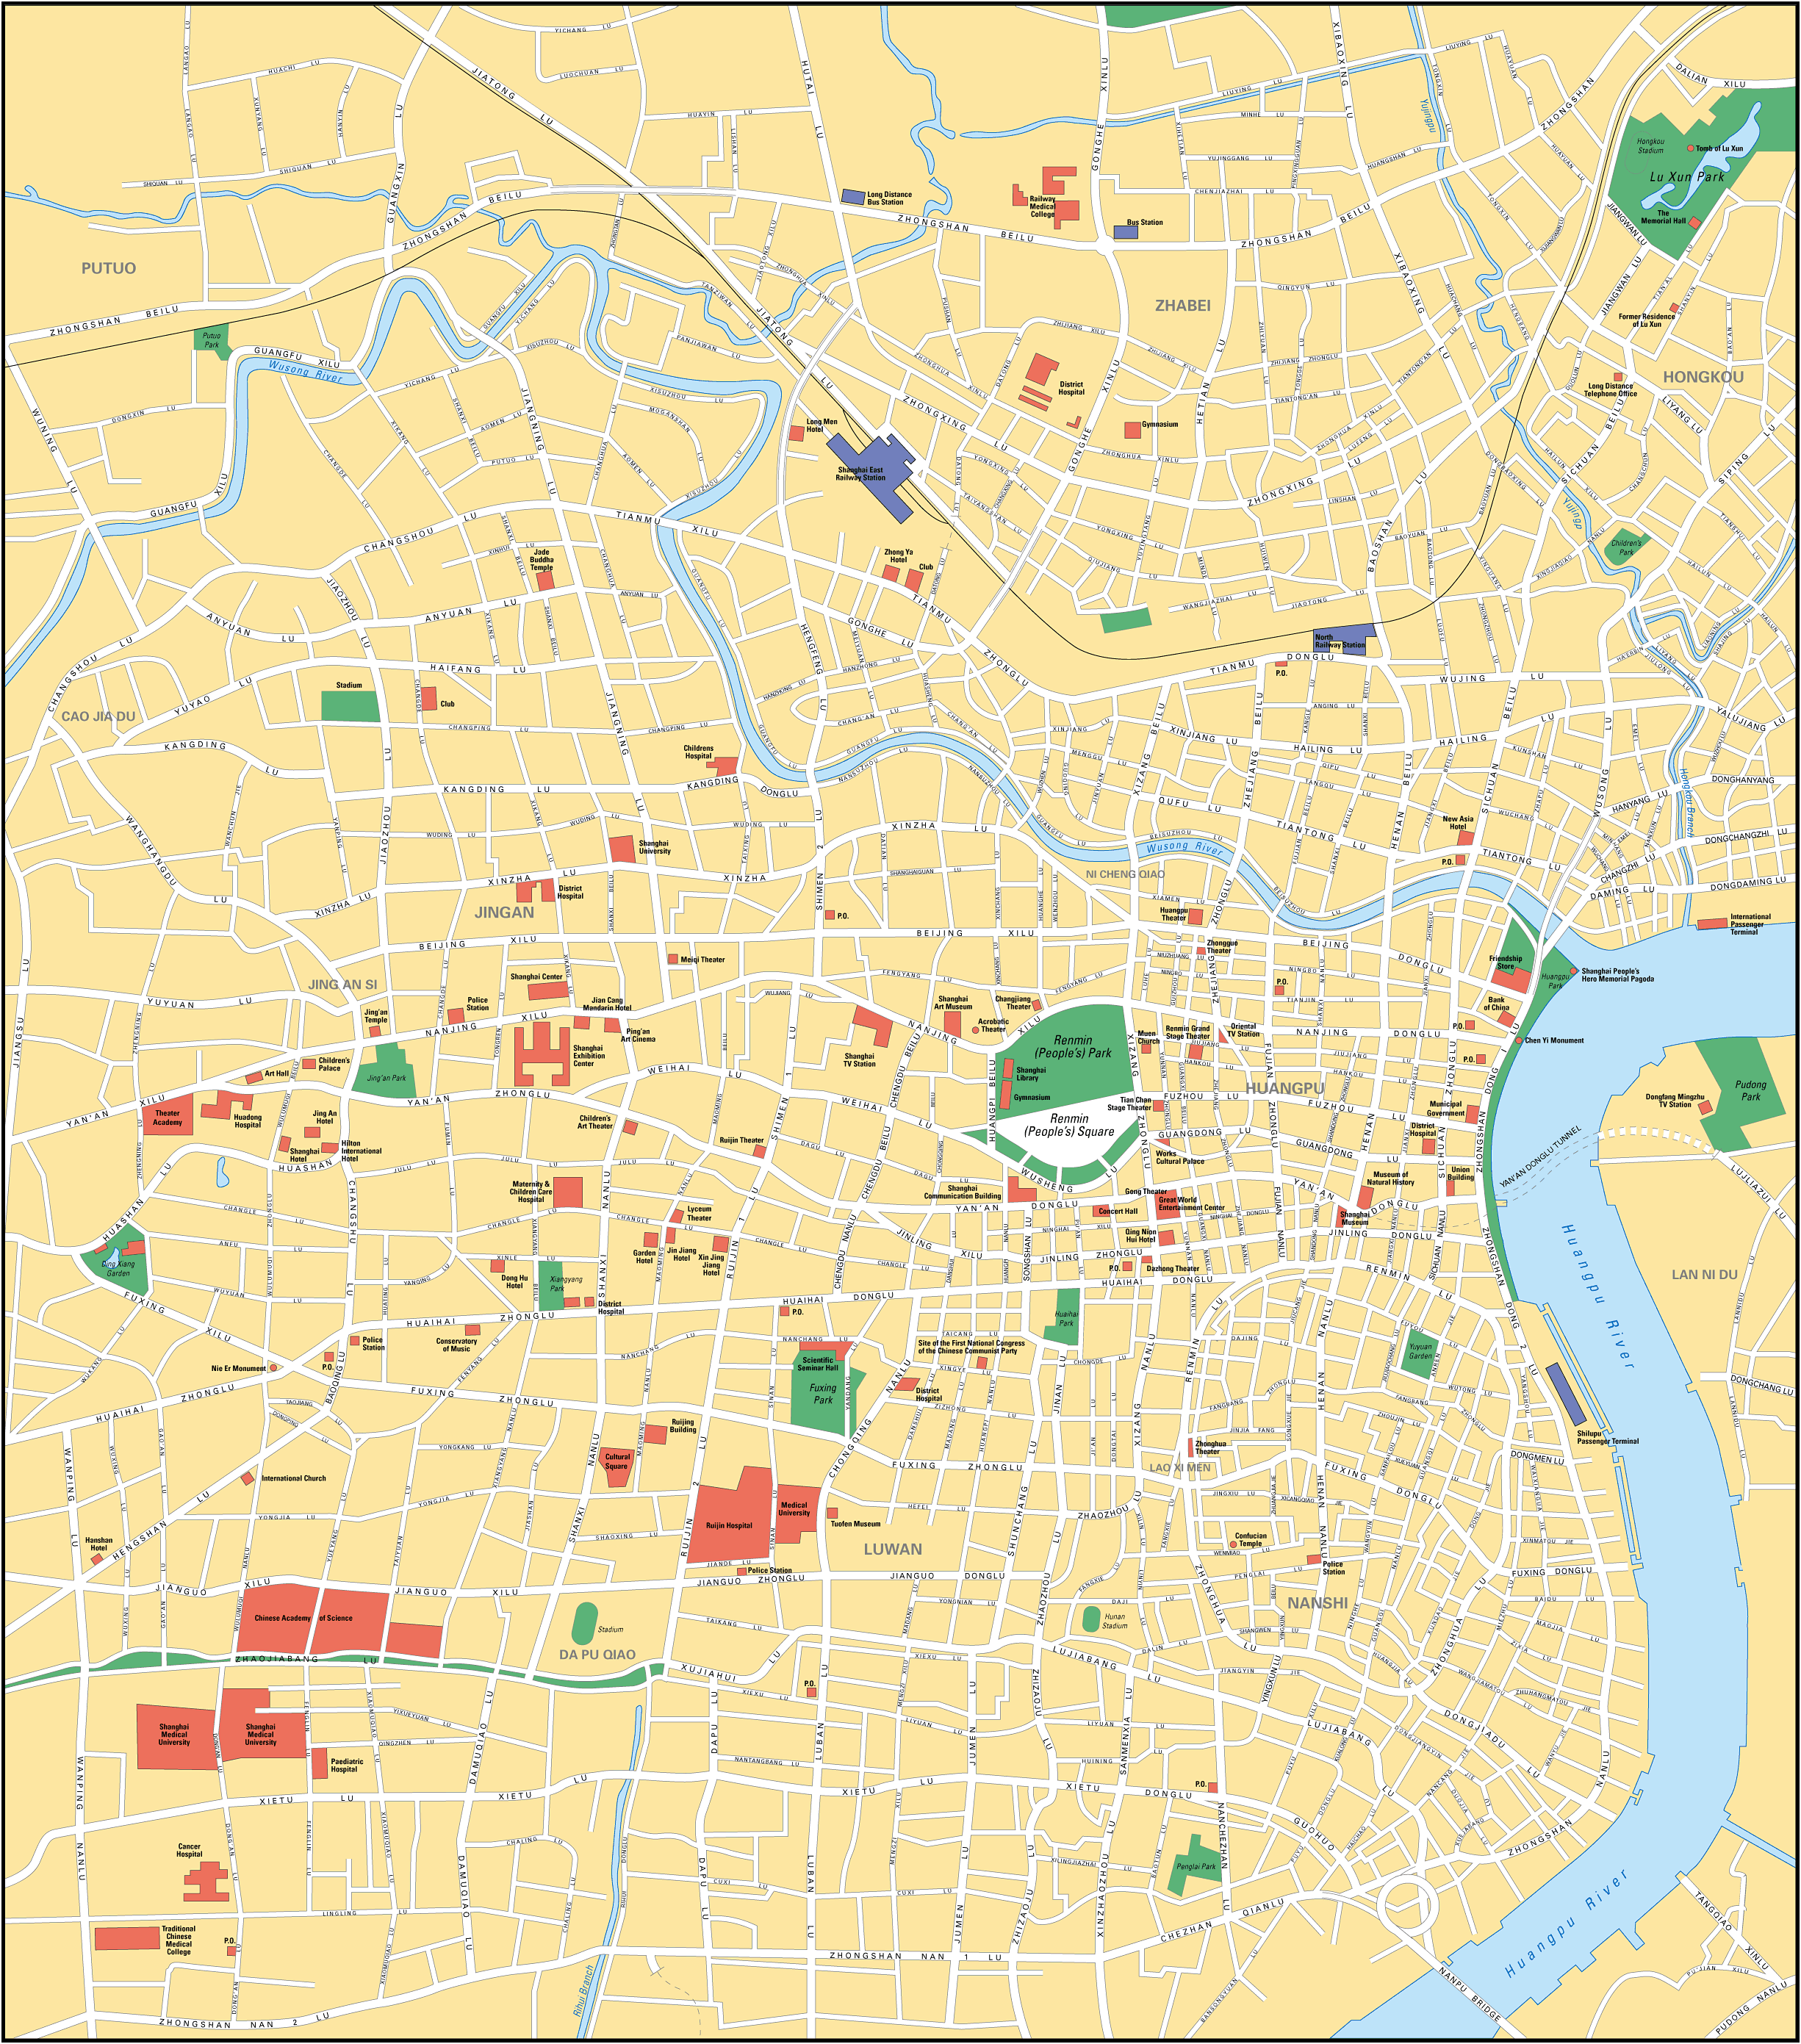 Plan de Shanghai | Carte de Shanghai